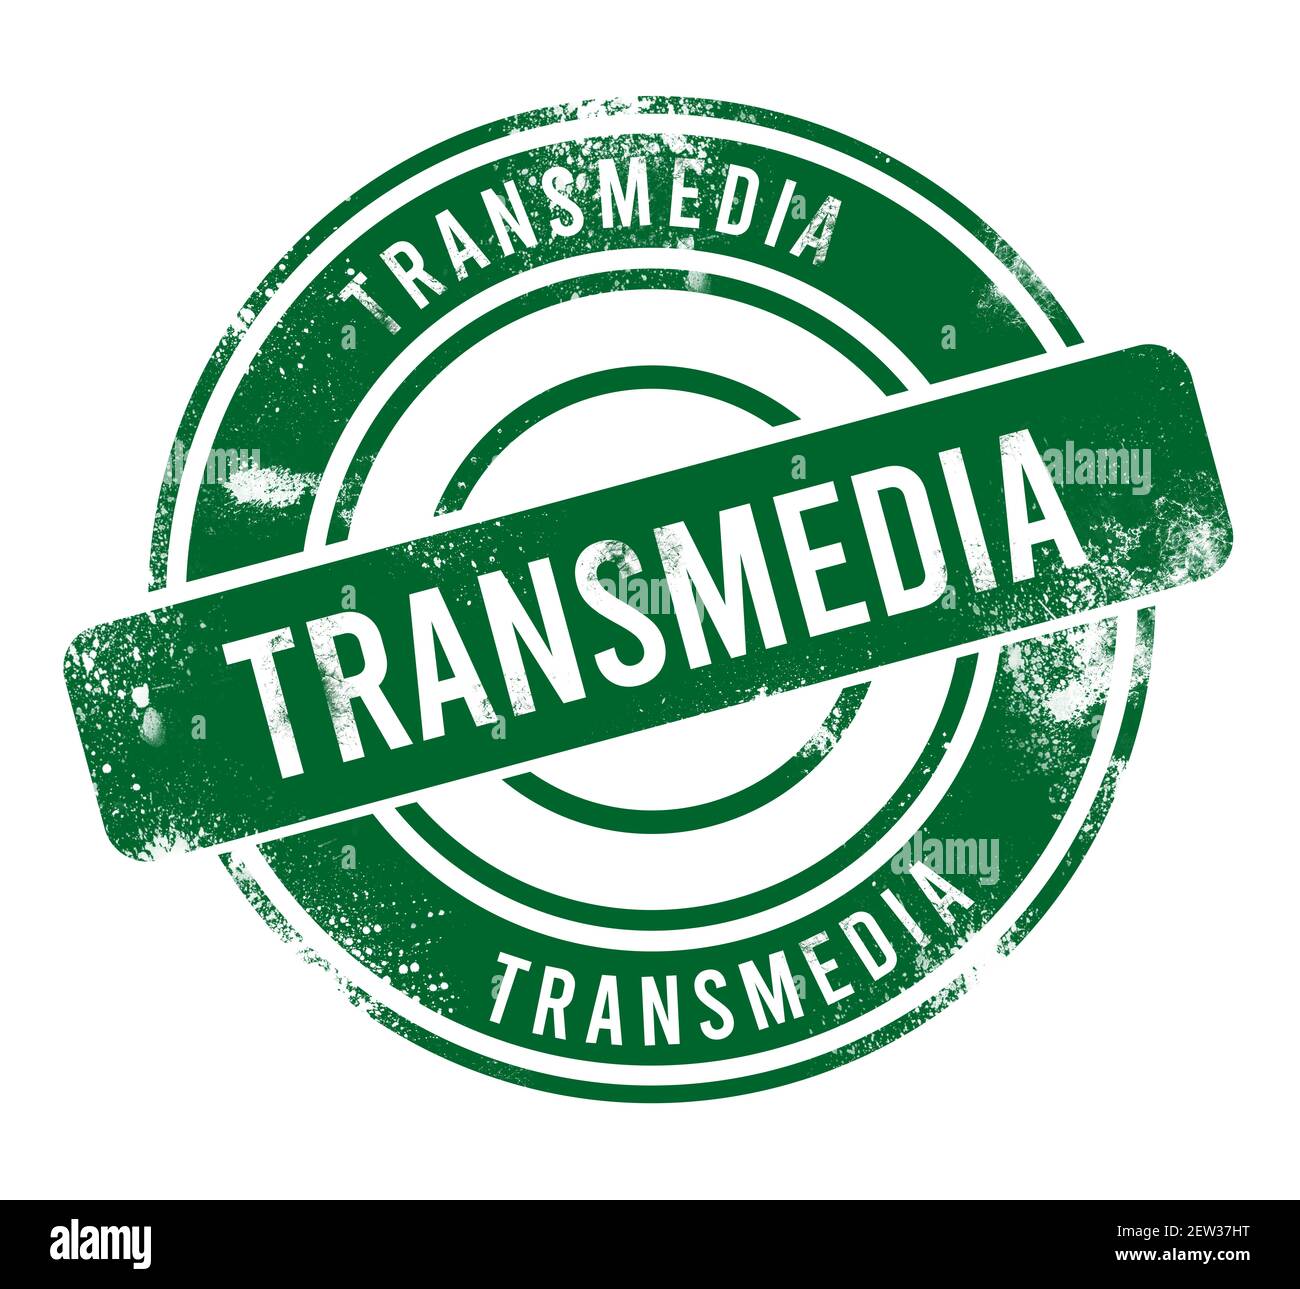 Transmedia - green round grunge button, stamp Stock Photo